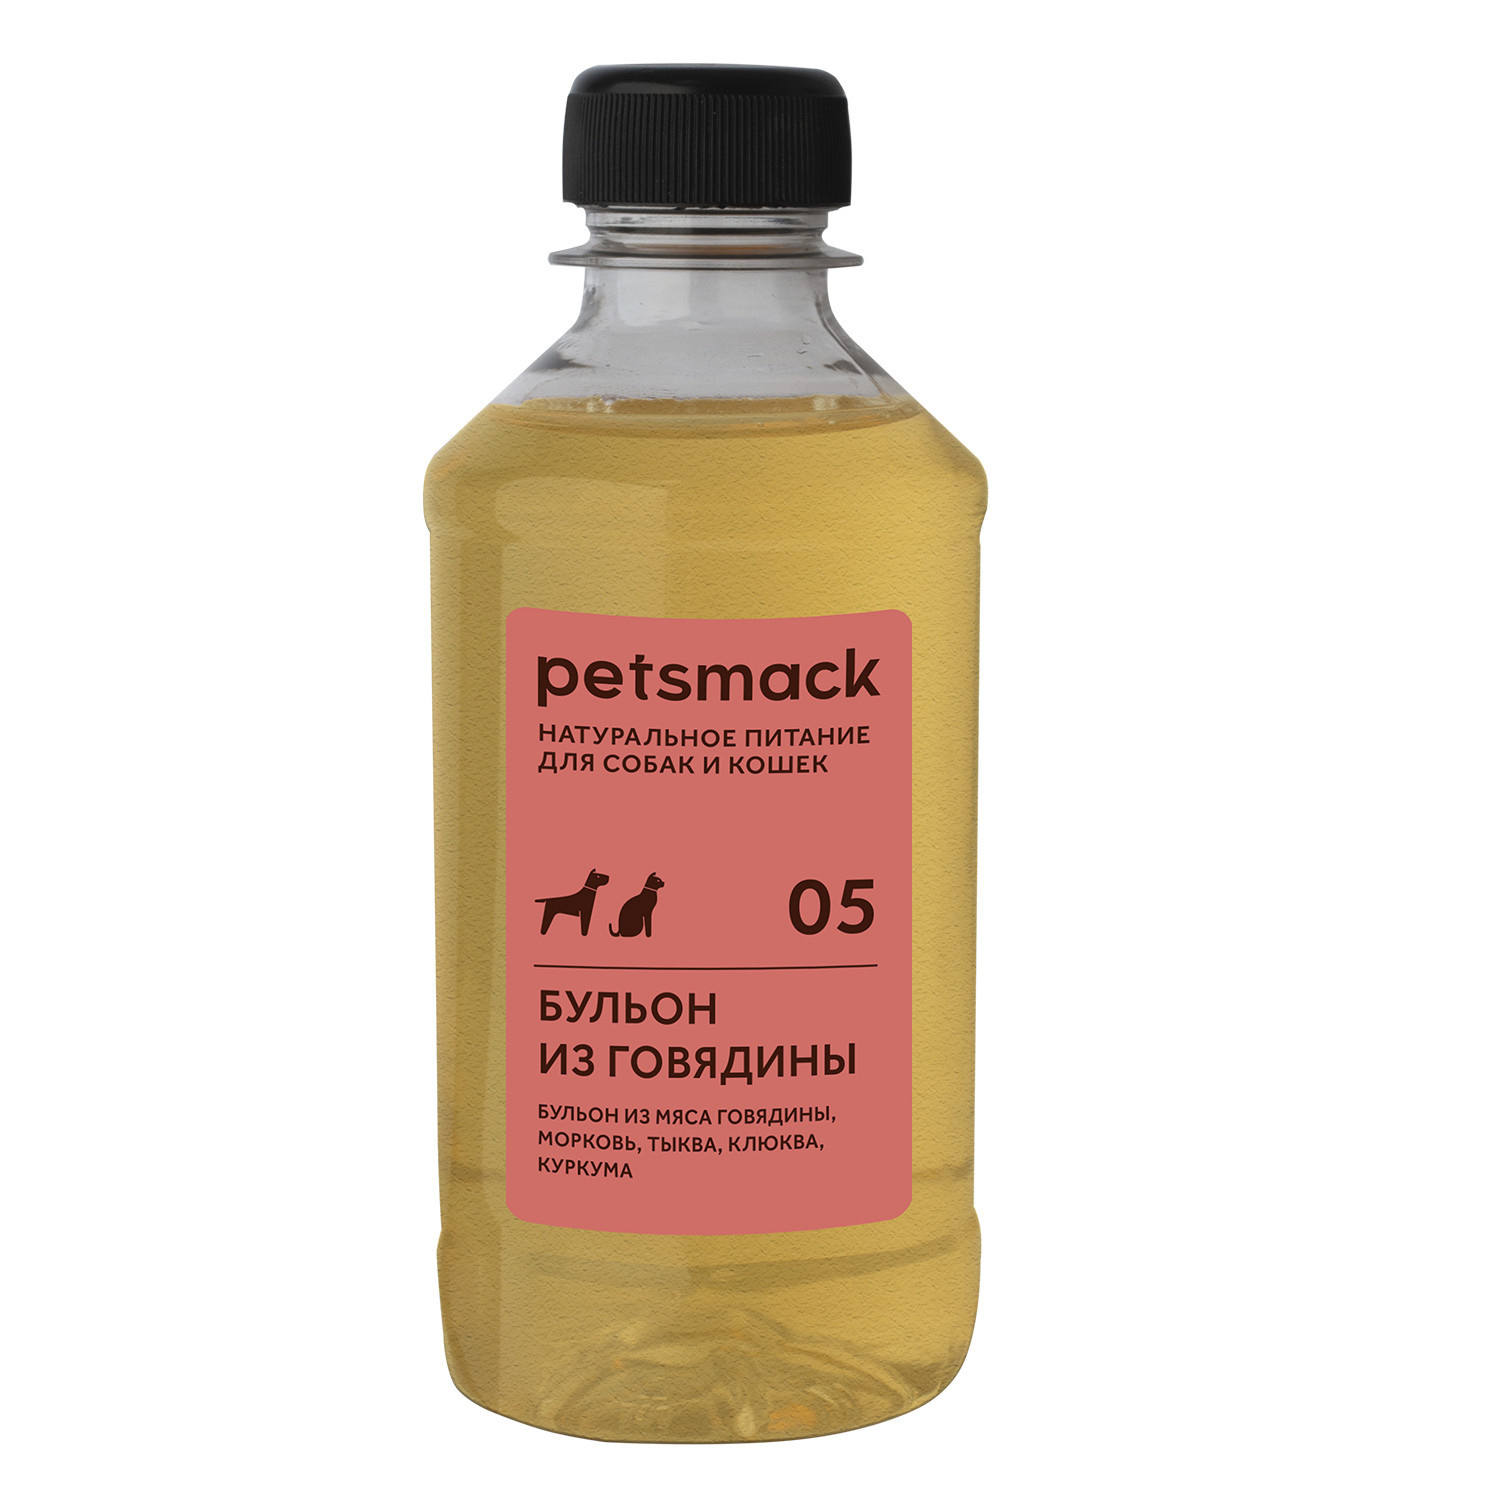 Petsmack Petsmack бульон из говядины (260 г)